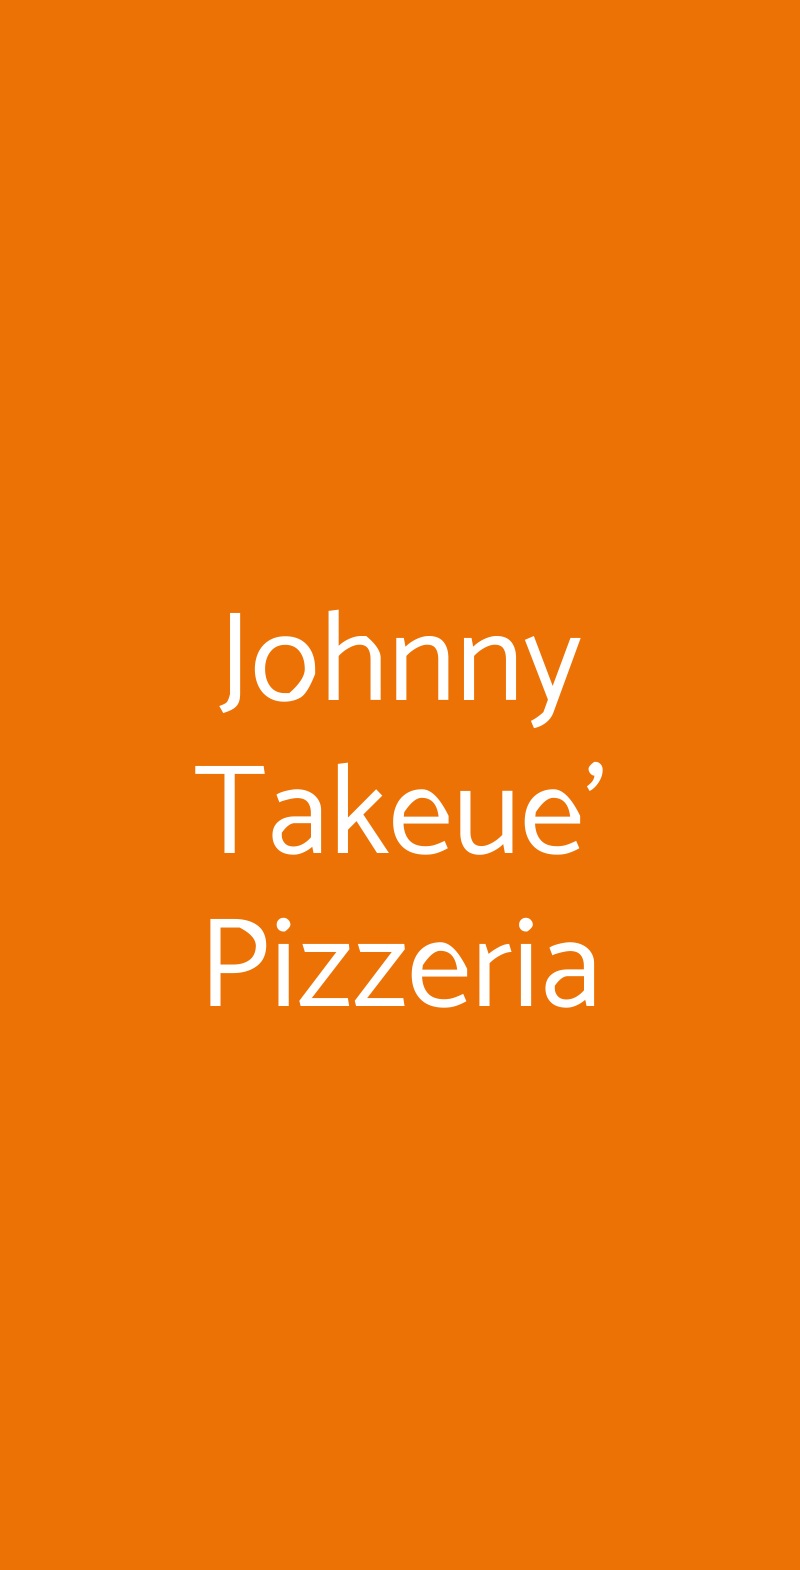 Johnny Takeue' Pizzeria Napoli menù 1 pagina